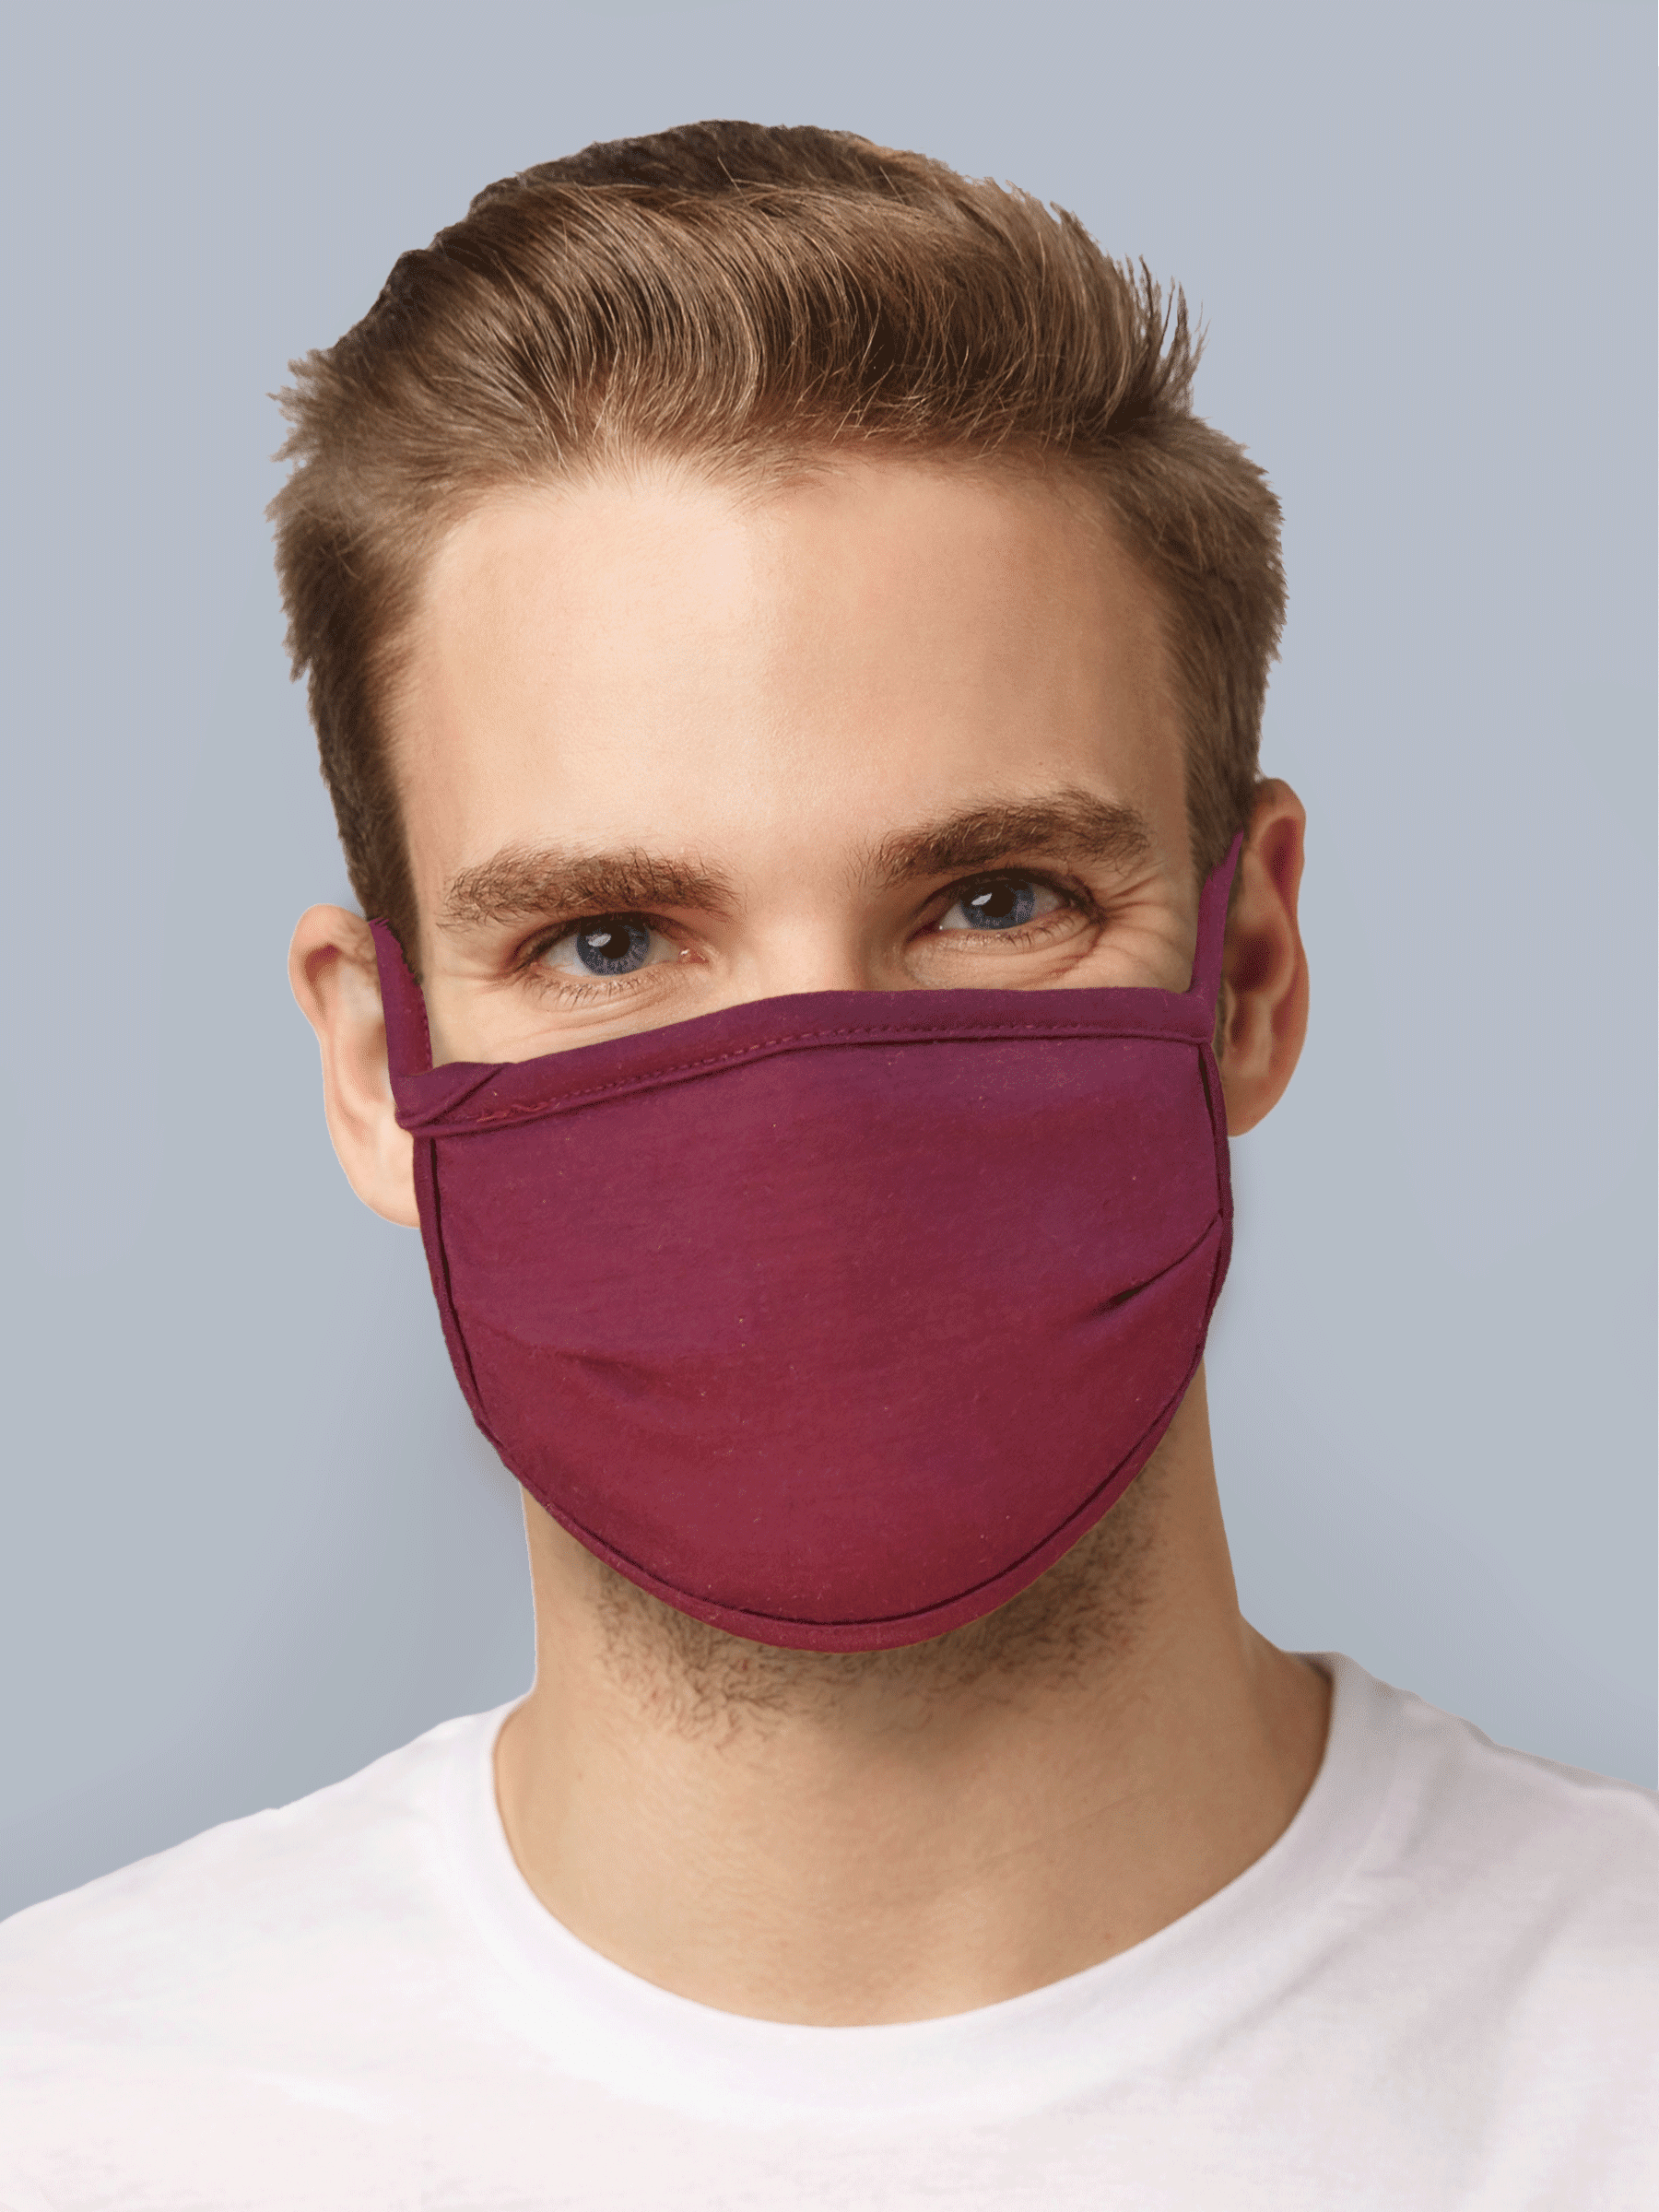 1Pcs Fashion Reusable Face Mask,Cotton Cloth Face Bandanas,Washable Dustproof Windproof Mouth Mask Face Cover,Anti-Foggy Anti-Haze Anti-Pollution for Men Women